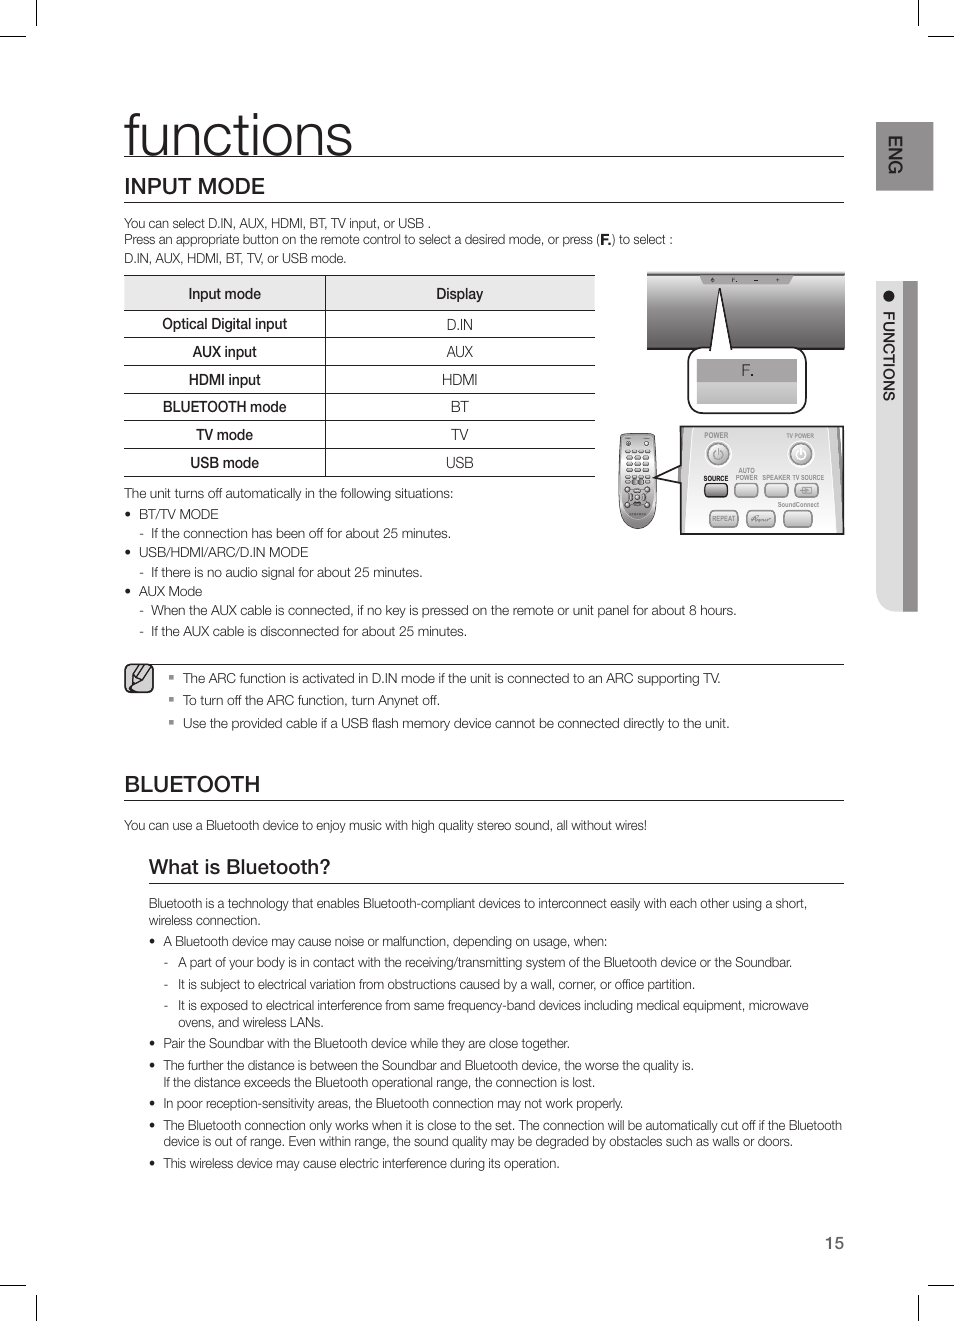 Functions, Input mode, Bluetooth | Samsung HW-H550-ZA User Manual